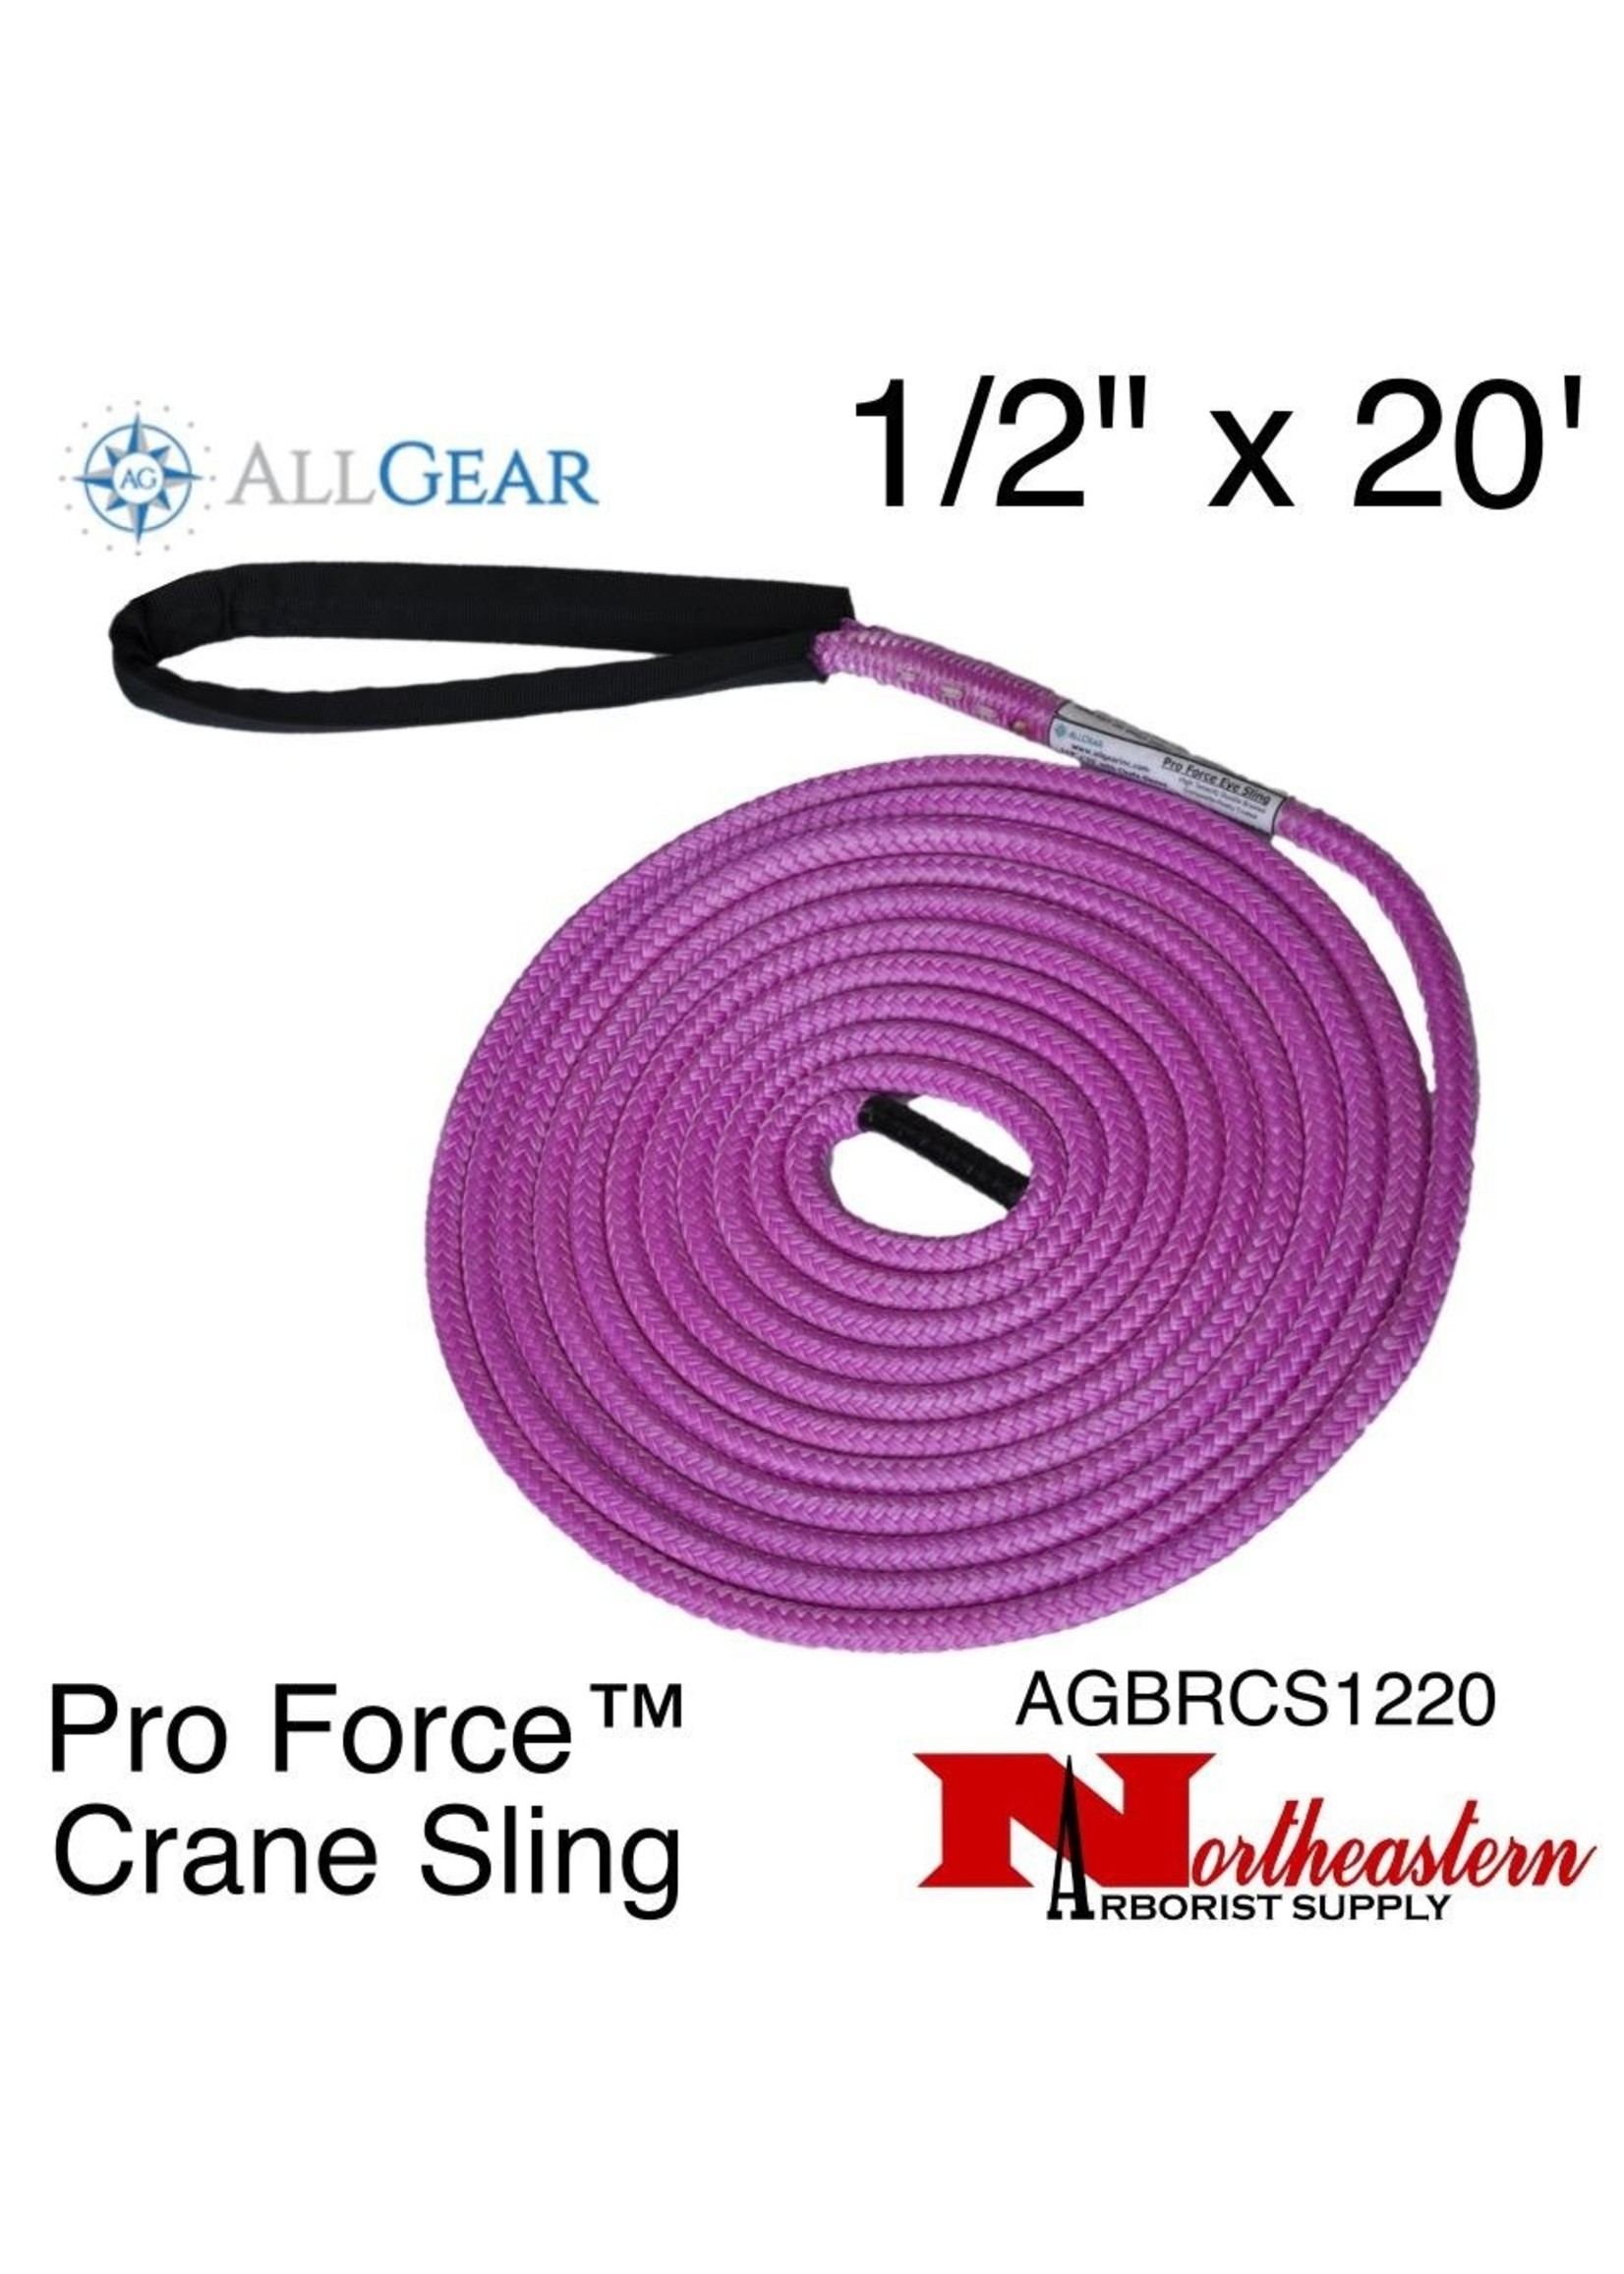 All Gear Inc. 1/2" x 20' "Pro Force" Crane Sling, with One 12" Spliced (Dead Eye). 19,500 Lbs Tensile